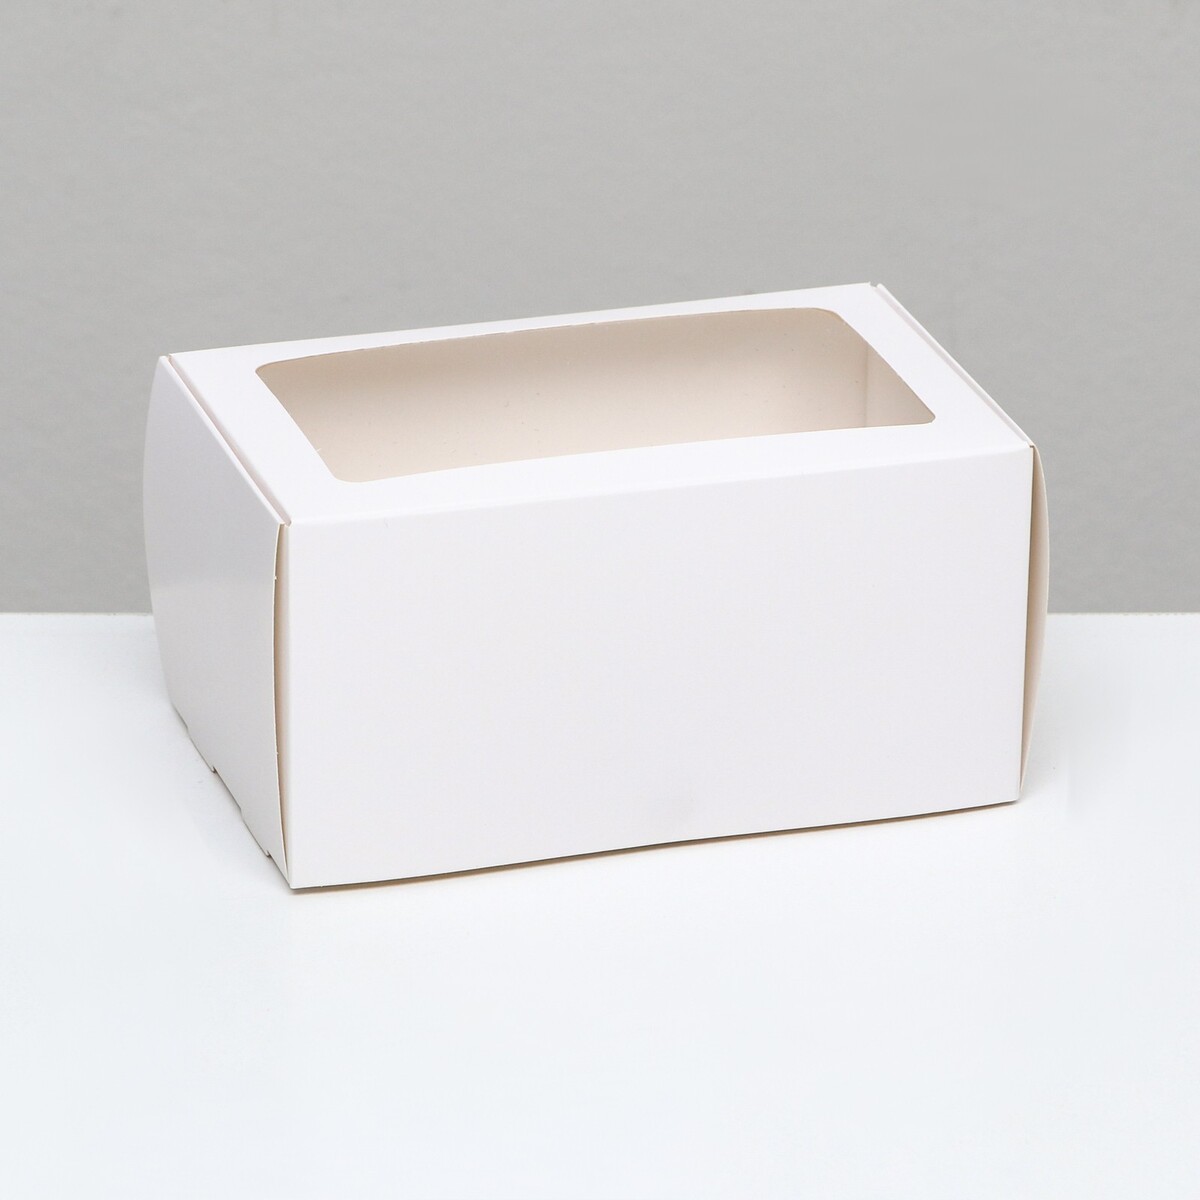 Коробка под 2 капкейка, белая, с окном 16 х 10 х 8 см коробка на 4 капкейка серебро 18 5 × 18 × 10 см